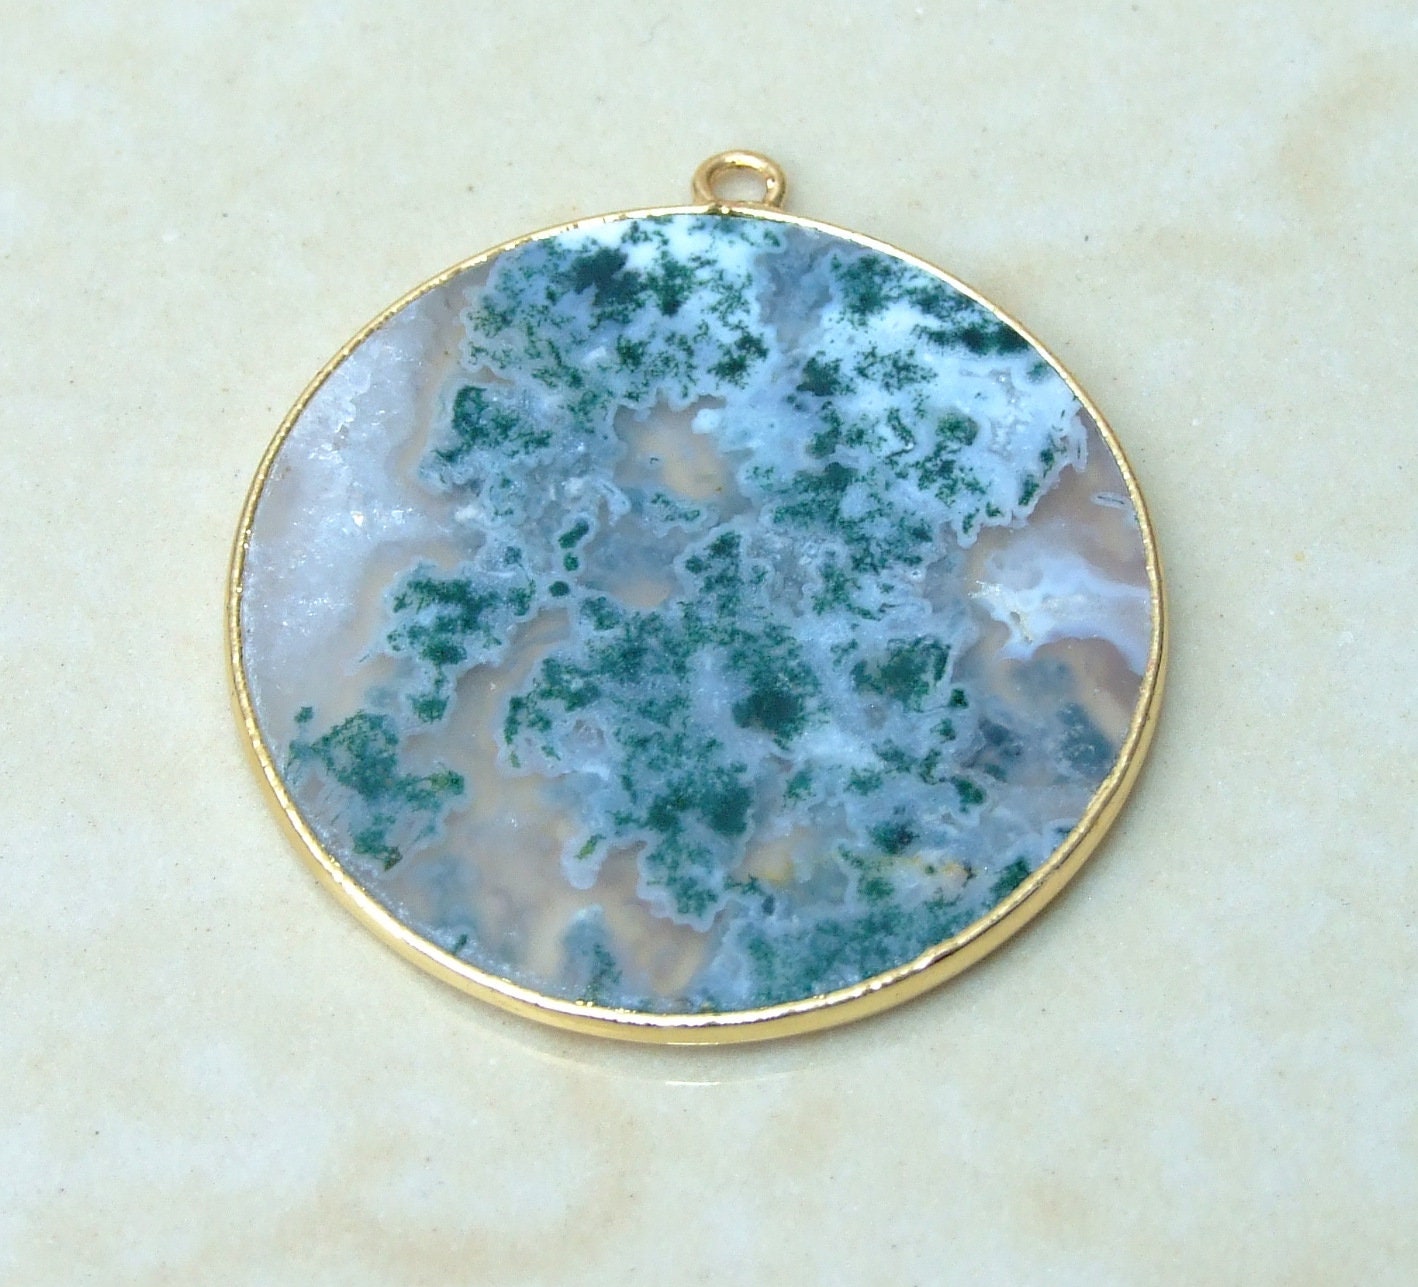 Moss Agate Pendant, Gemstone Pendant, Thin Agate Slice, Polished Agate, Round, Gold Bezel, Jewelry Stones, Necklace Pendant, 30mm